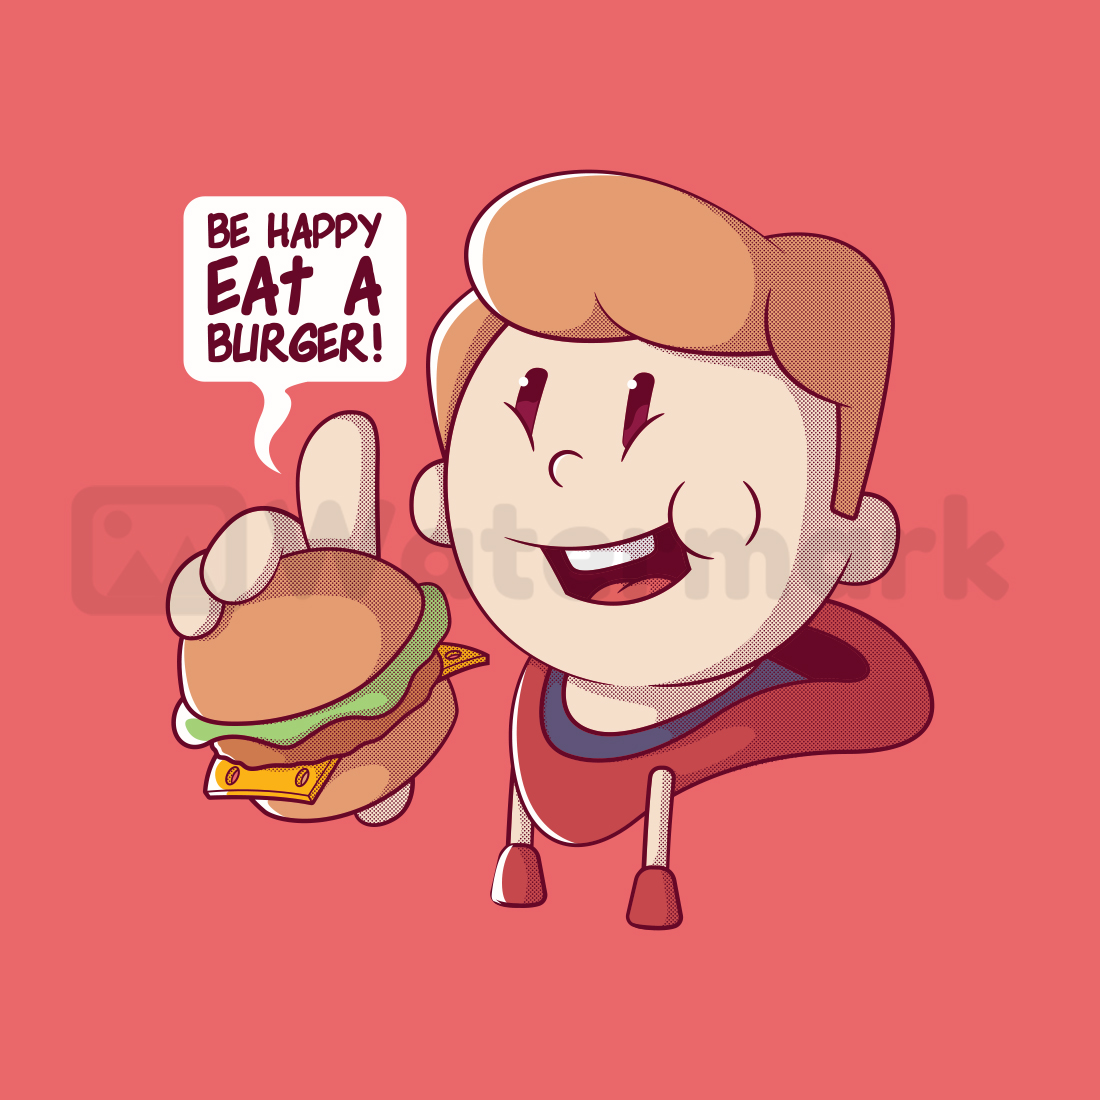 Eat A Burger Vector Design cover image.